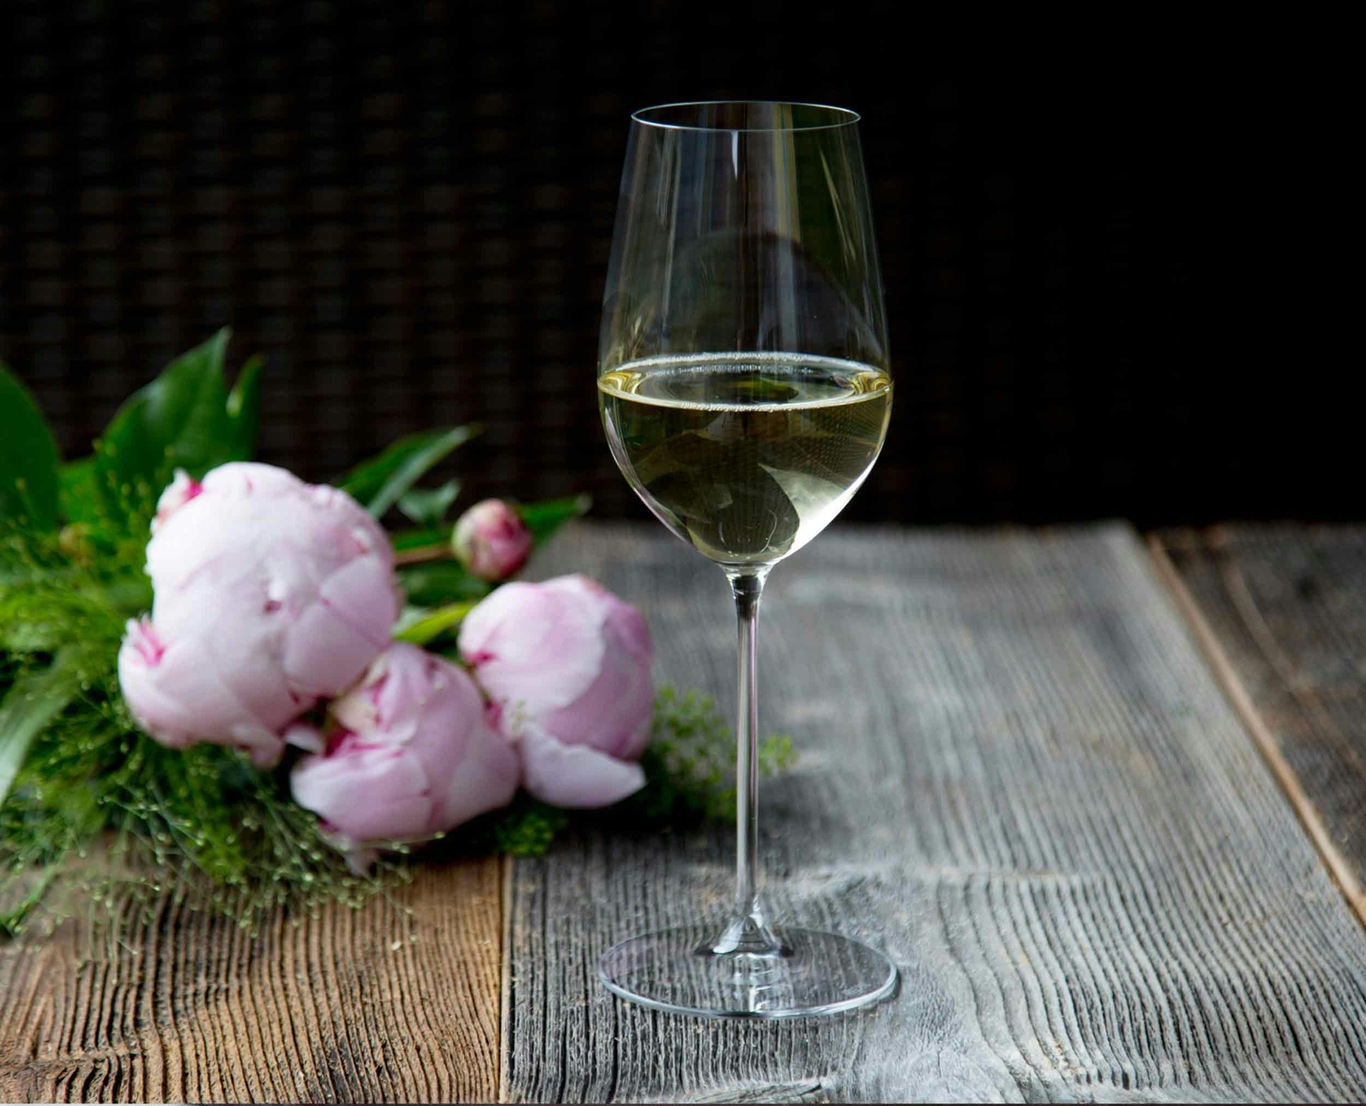 https://royaldesign.com/image/11/riedel-veritas-wine-glass-riesling-chianti-zinfandel-2-pcs-1?w=800&quality=80